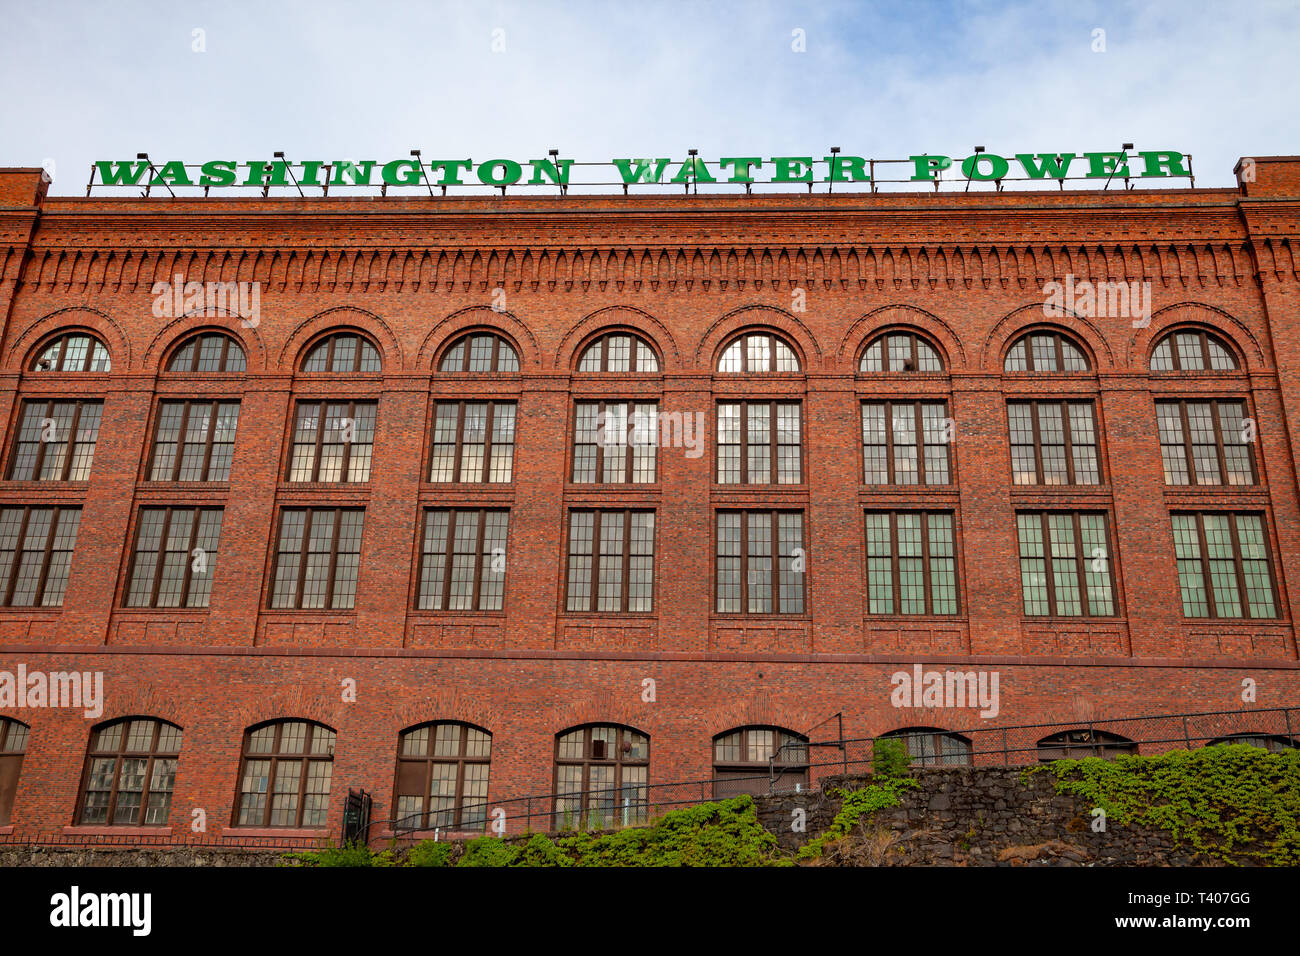 SPOKANE, WASHINGTON, USA - MAY 16, 2018: The Washington Water Power building in Spokane Washington Stock Photo